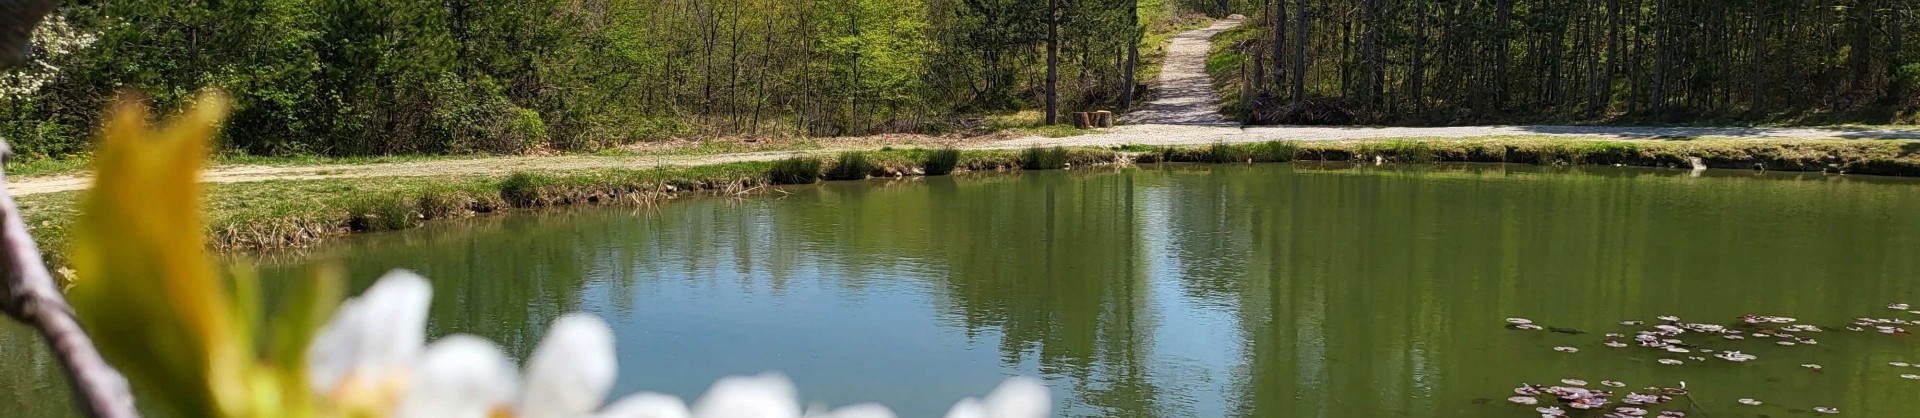 Jezero galantici slovenska istra moja jezera manca korelc 2 sl